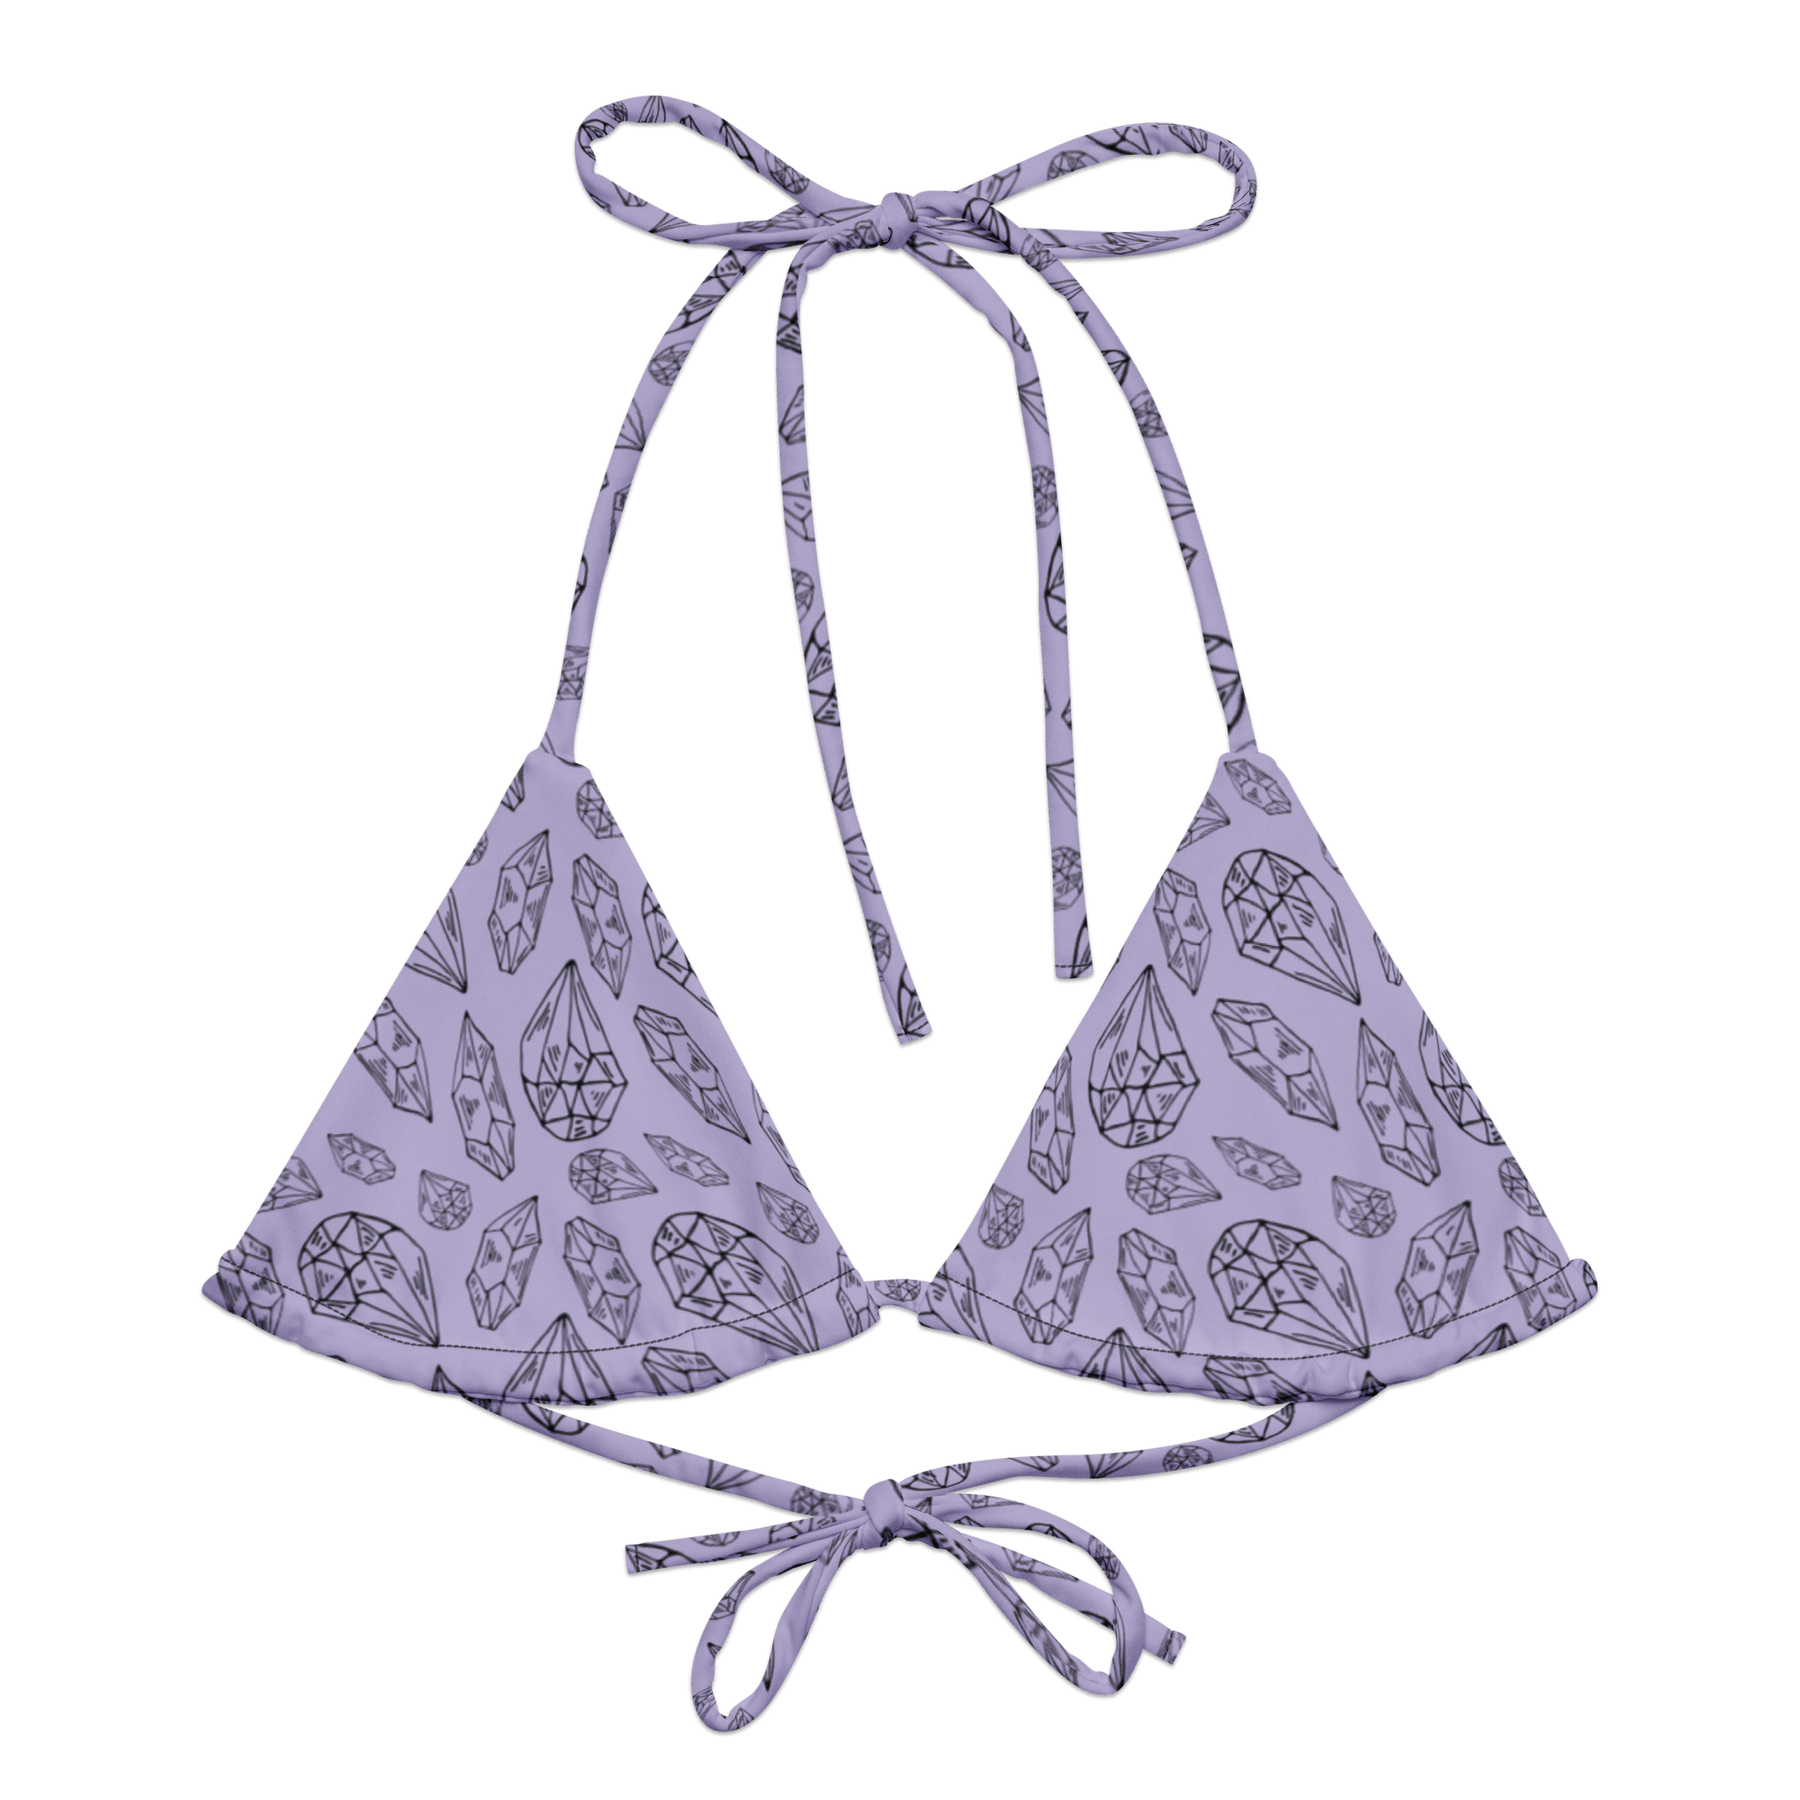 Crystal Queen String Bikini Top - Goth Cloth Co.3904964_16564